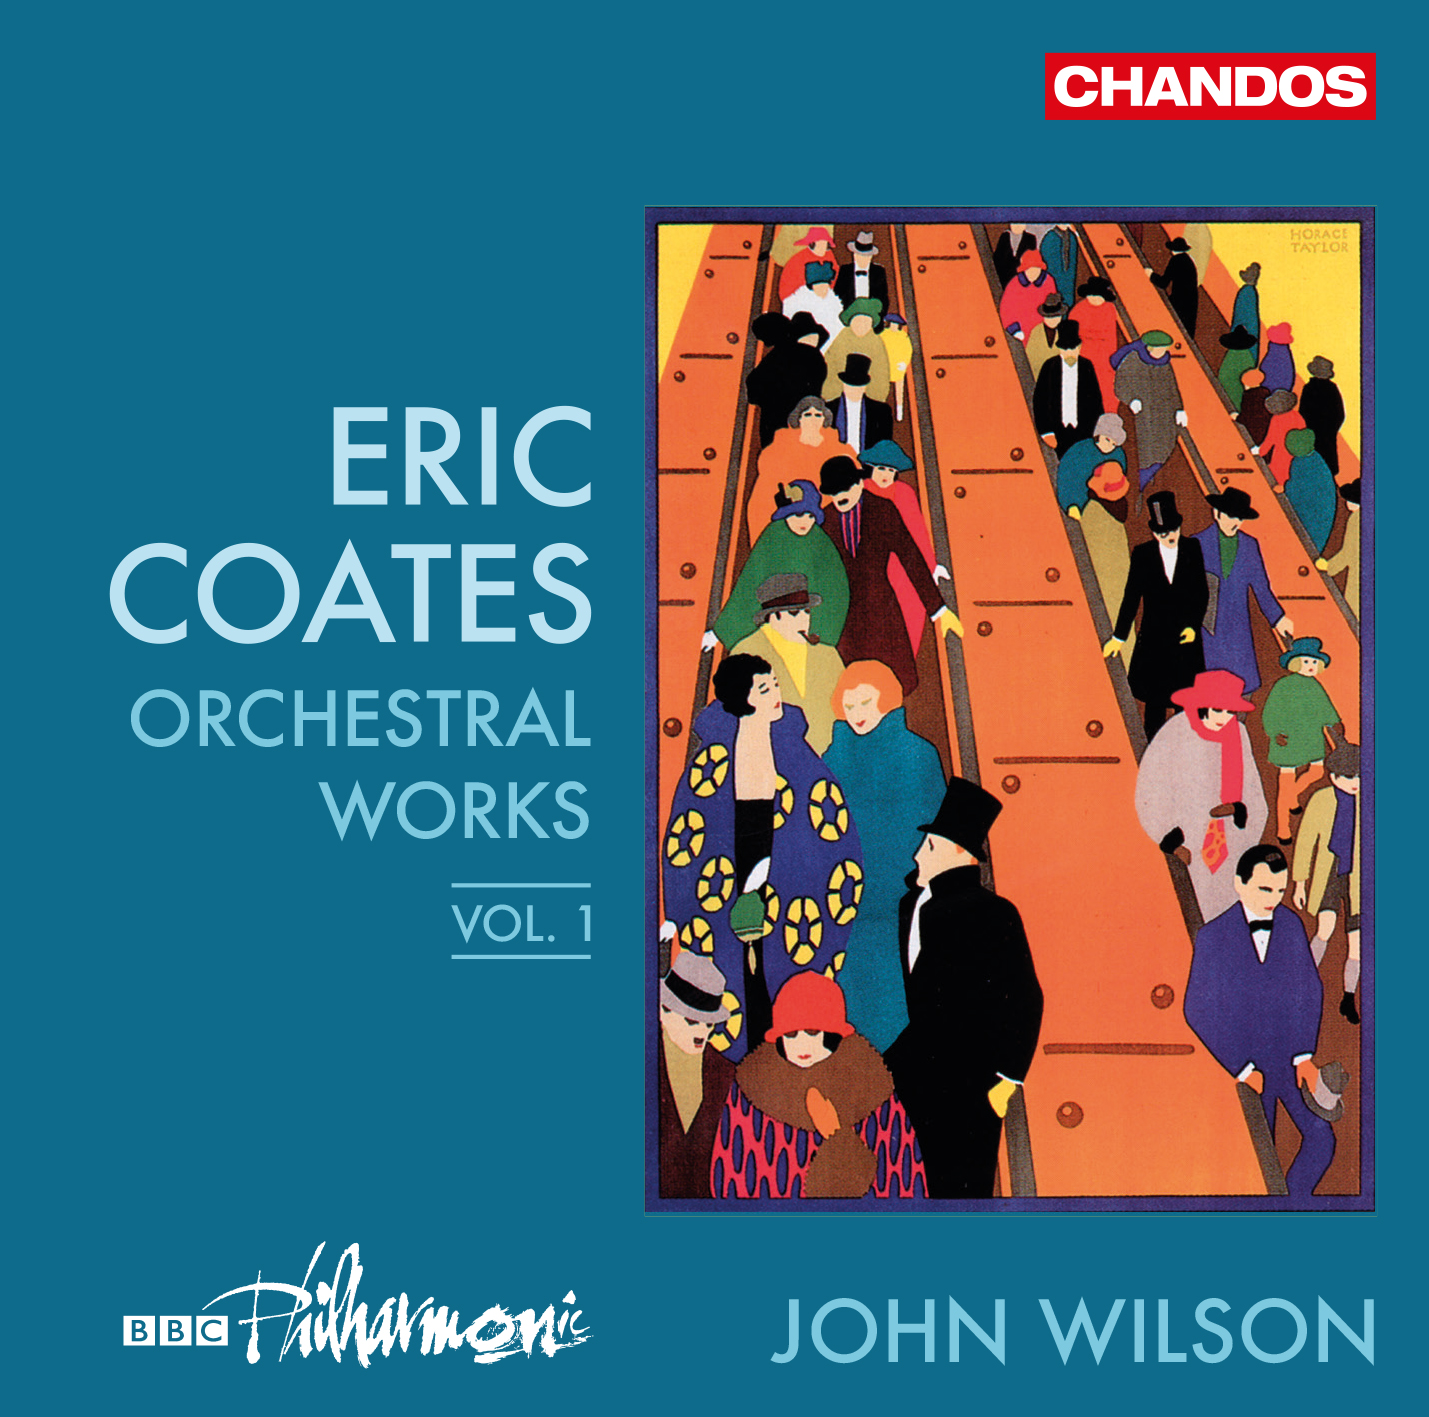 BBC Philharmonic Orchestra & John Wilson - Eric Coates - Orchestra Works, Vol.1 (2019) [FLAC 24bit/96kHz]